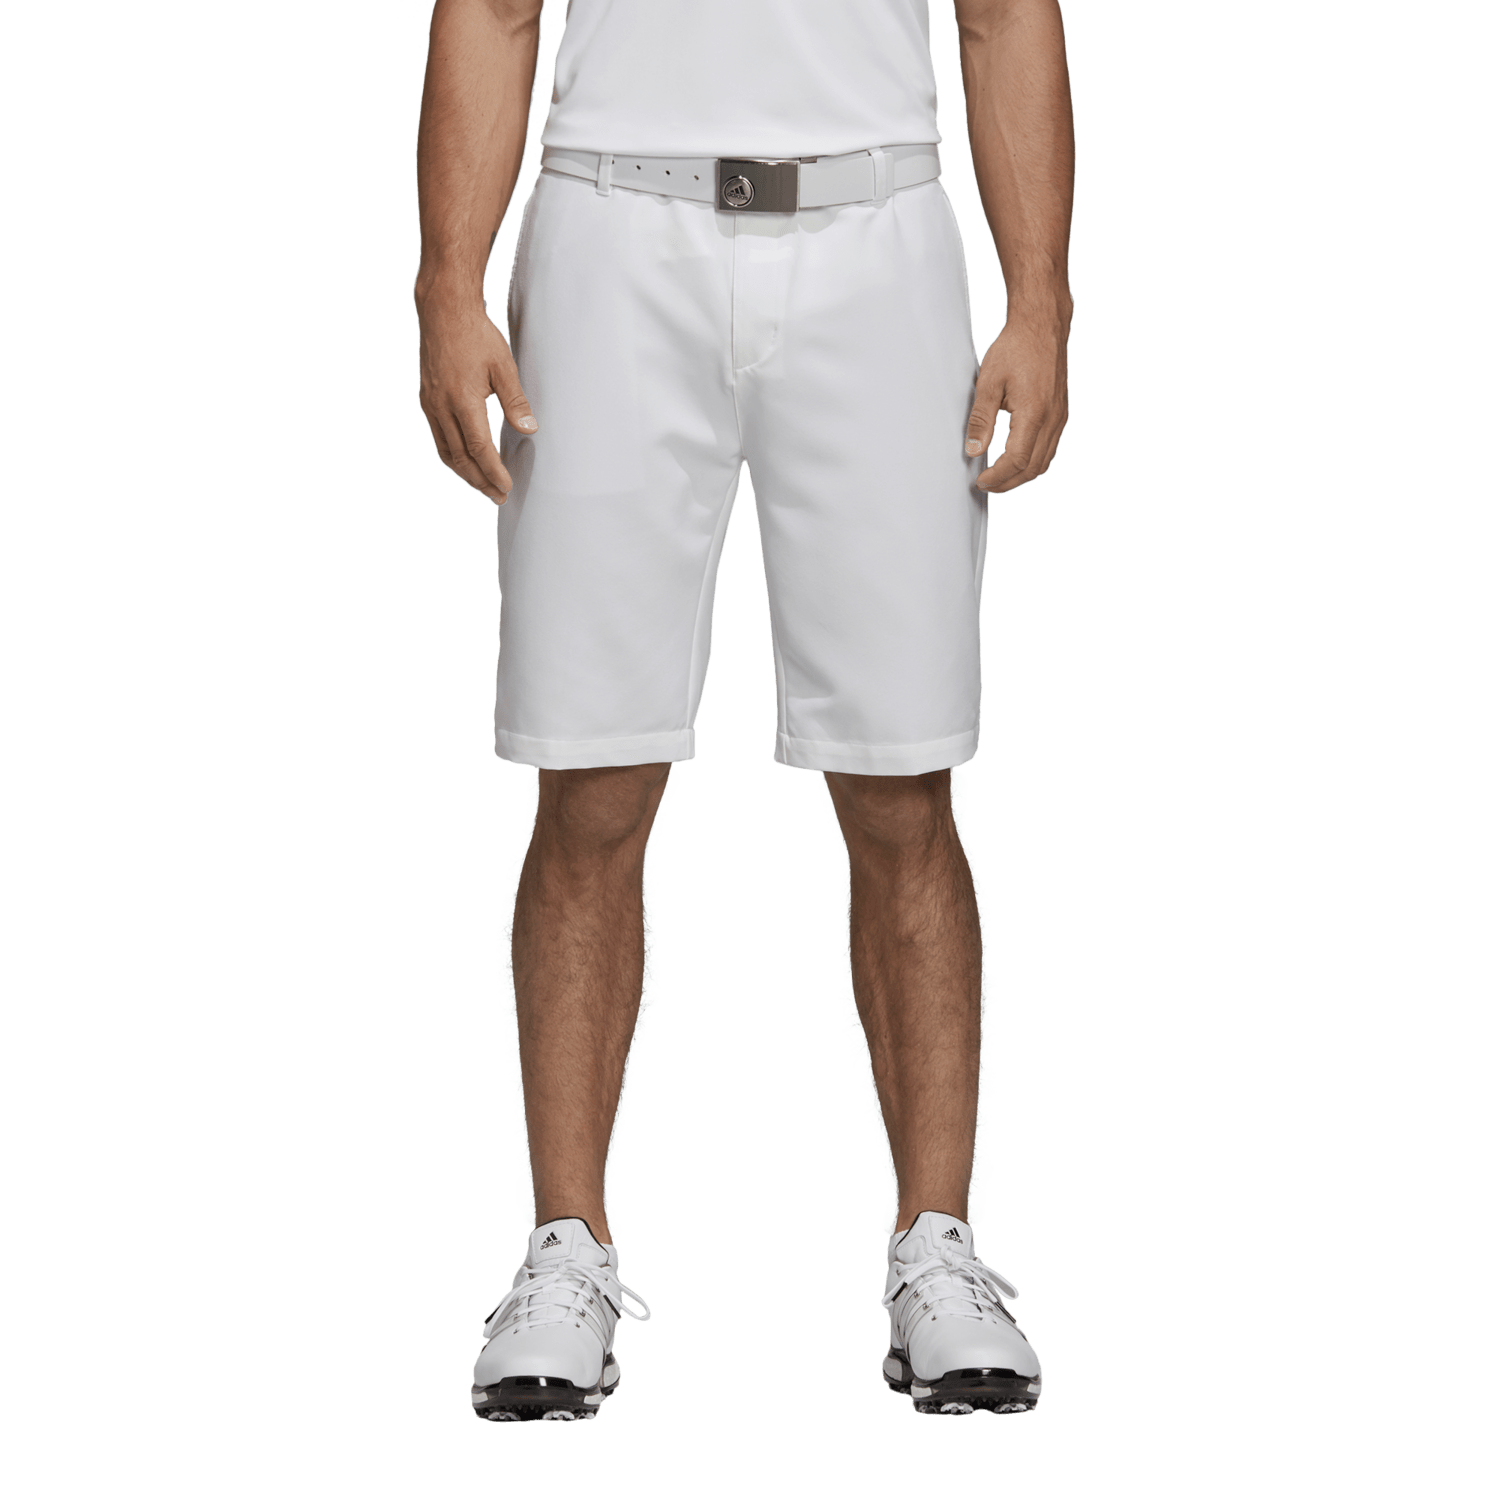 discount adidas golf shorts